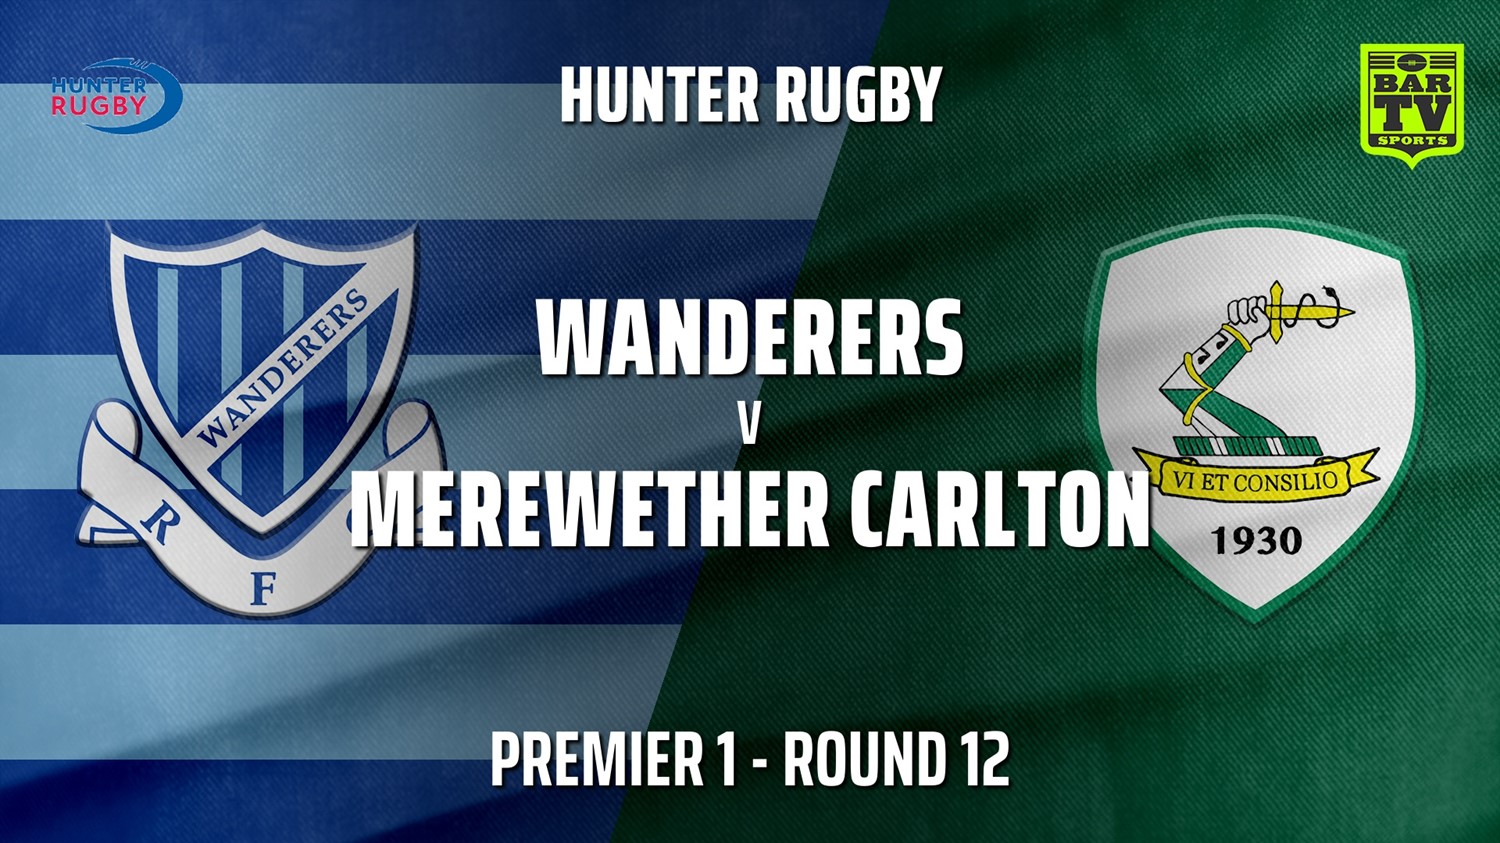 210721-Hunter Rugby Round 12 - Premier 1 - Wanderers v Merewether Carlton Minigame Slate Image